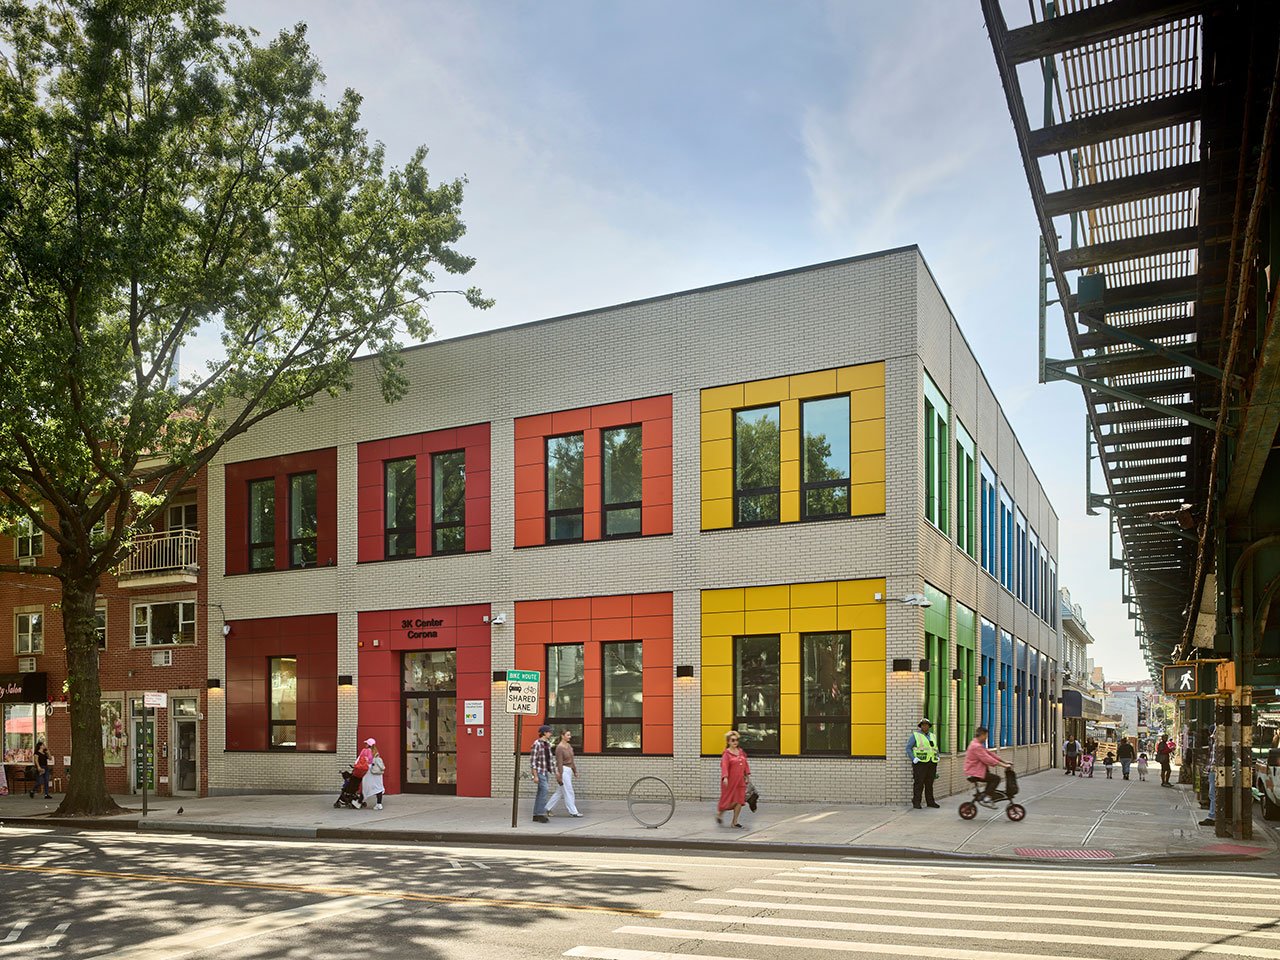 A Partially Constructed Commercial Building Transformed Into a Vibrant Public Preschool